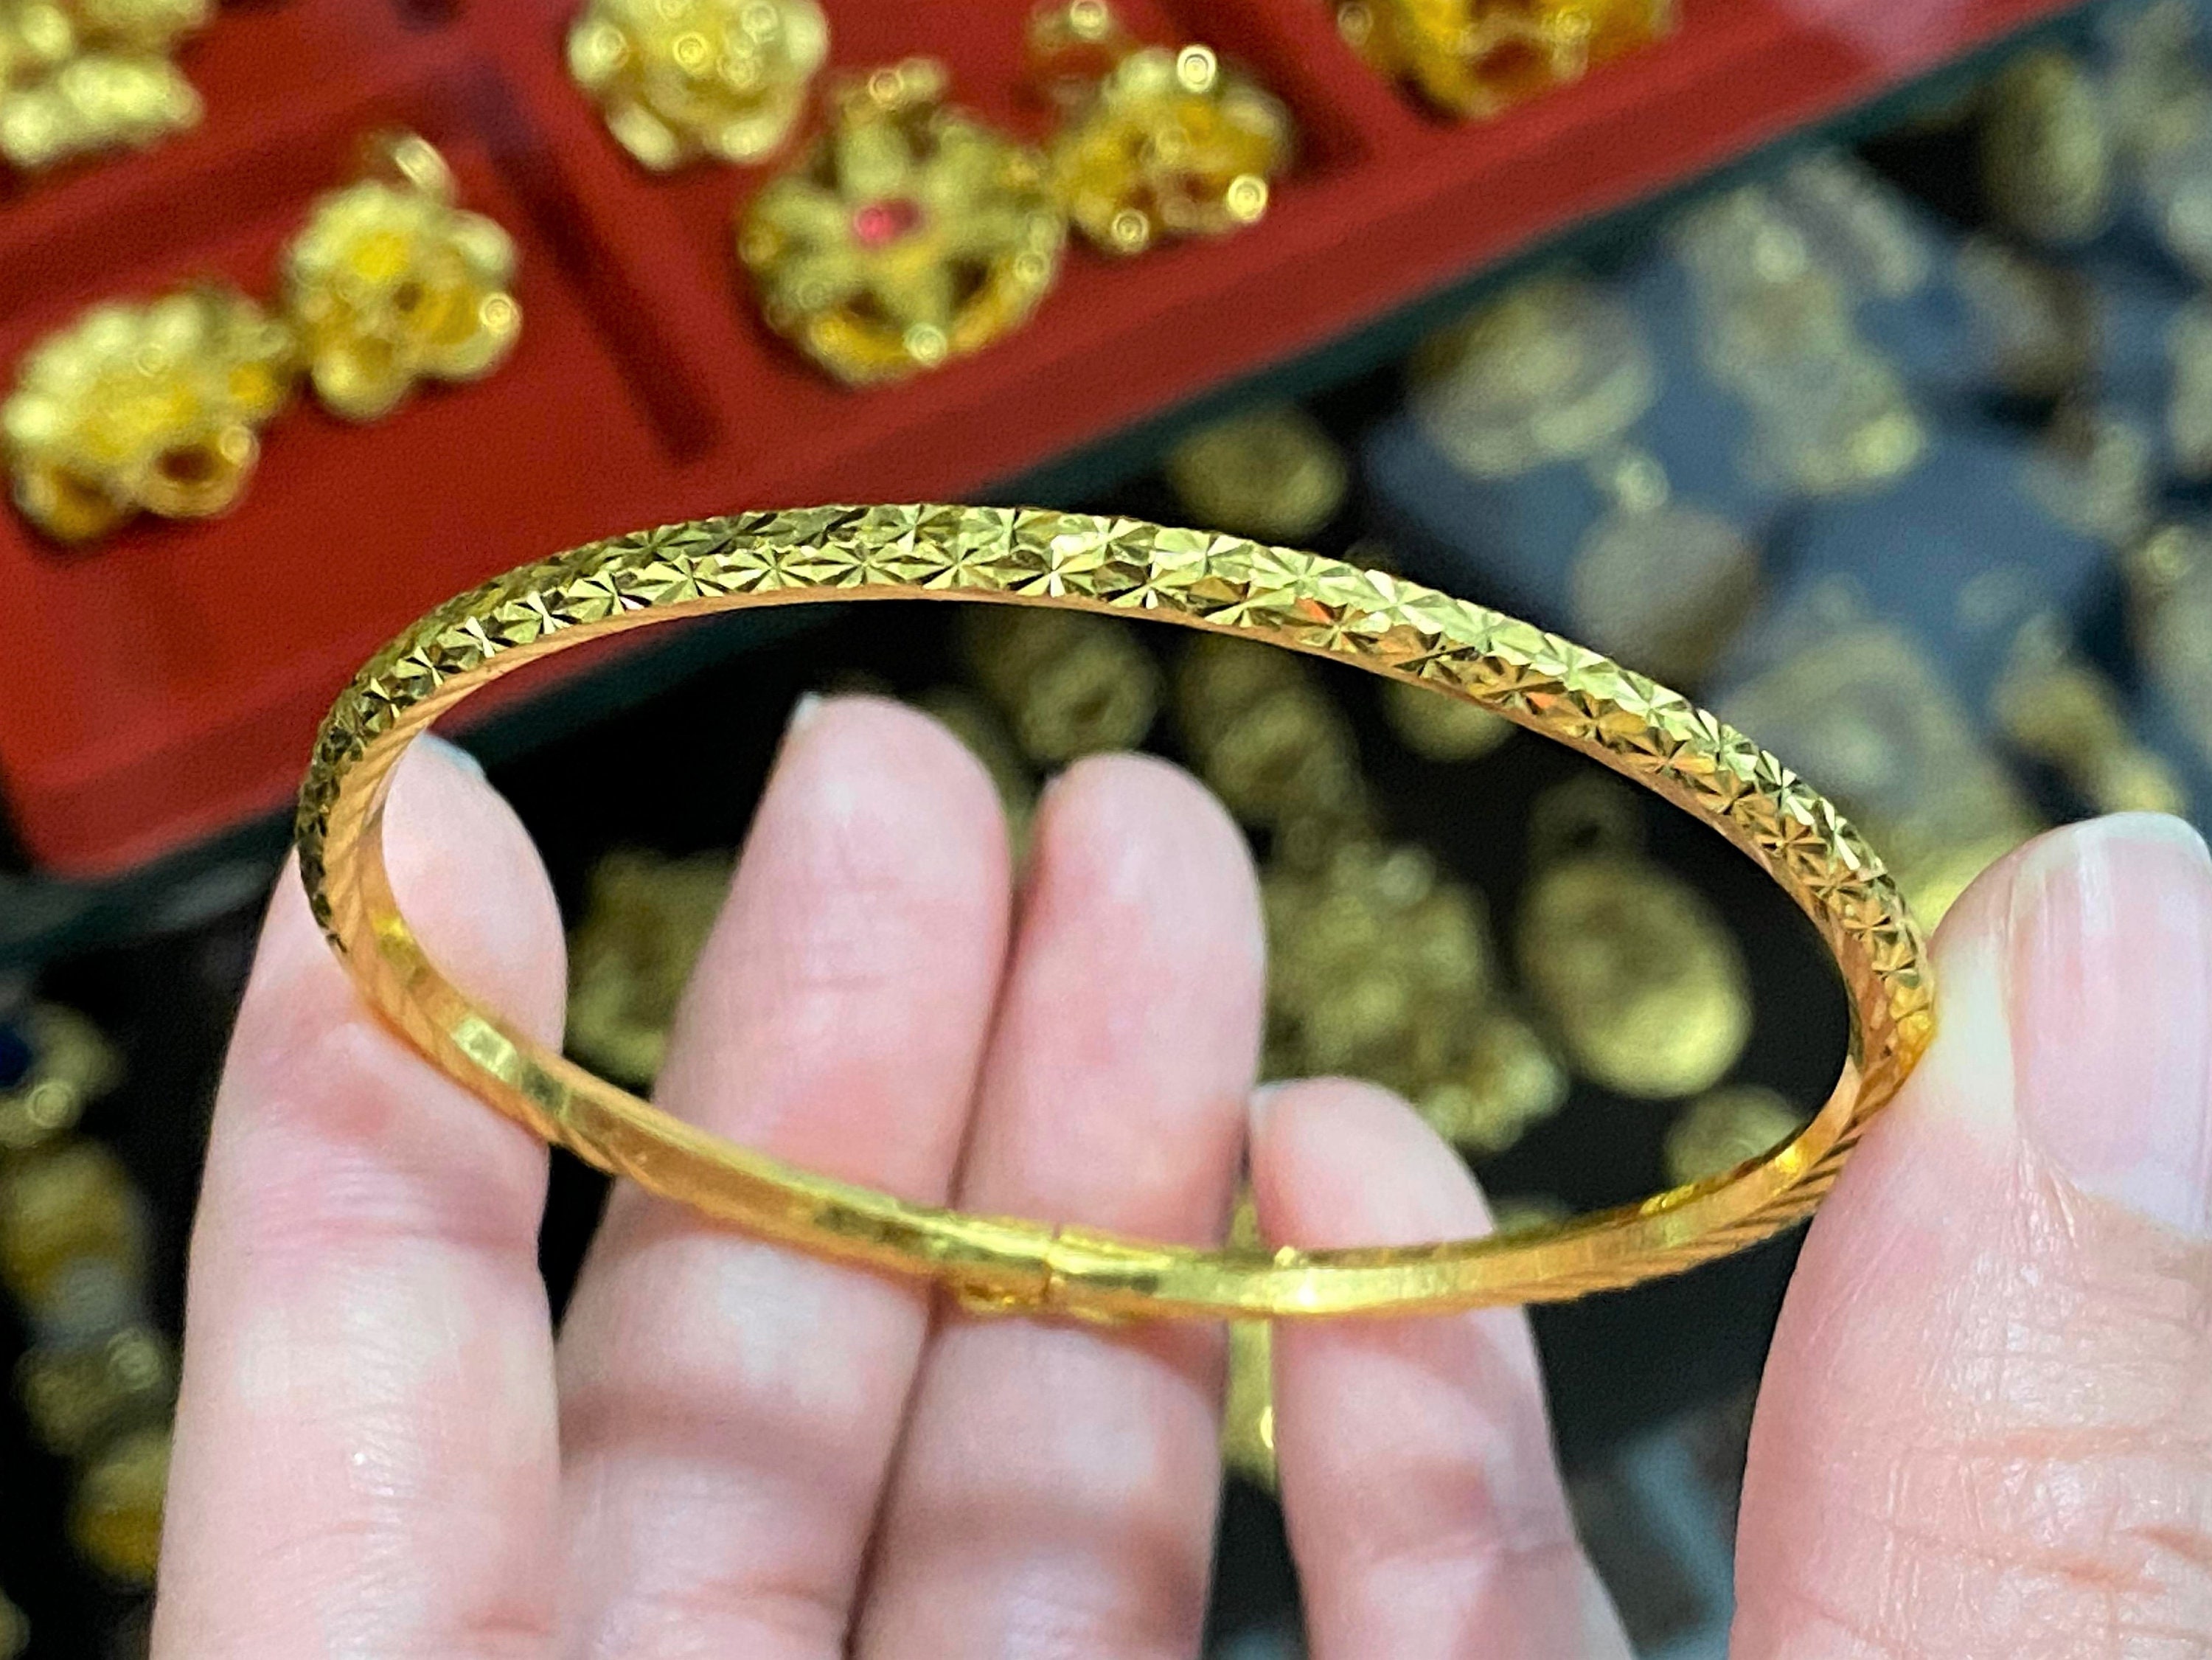 Solid Pure 24K Gold Bracelet Women Men Curb Link Boss Chain 75inch18g  足金999  Inox Wind